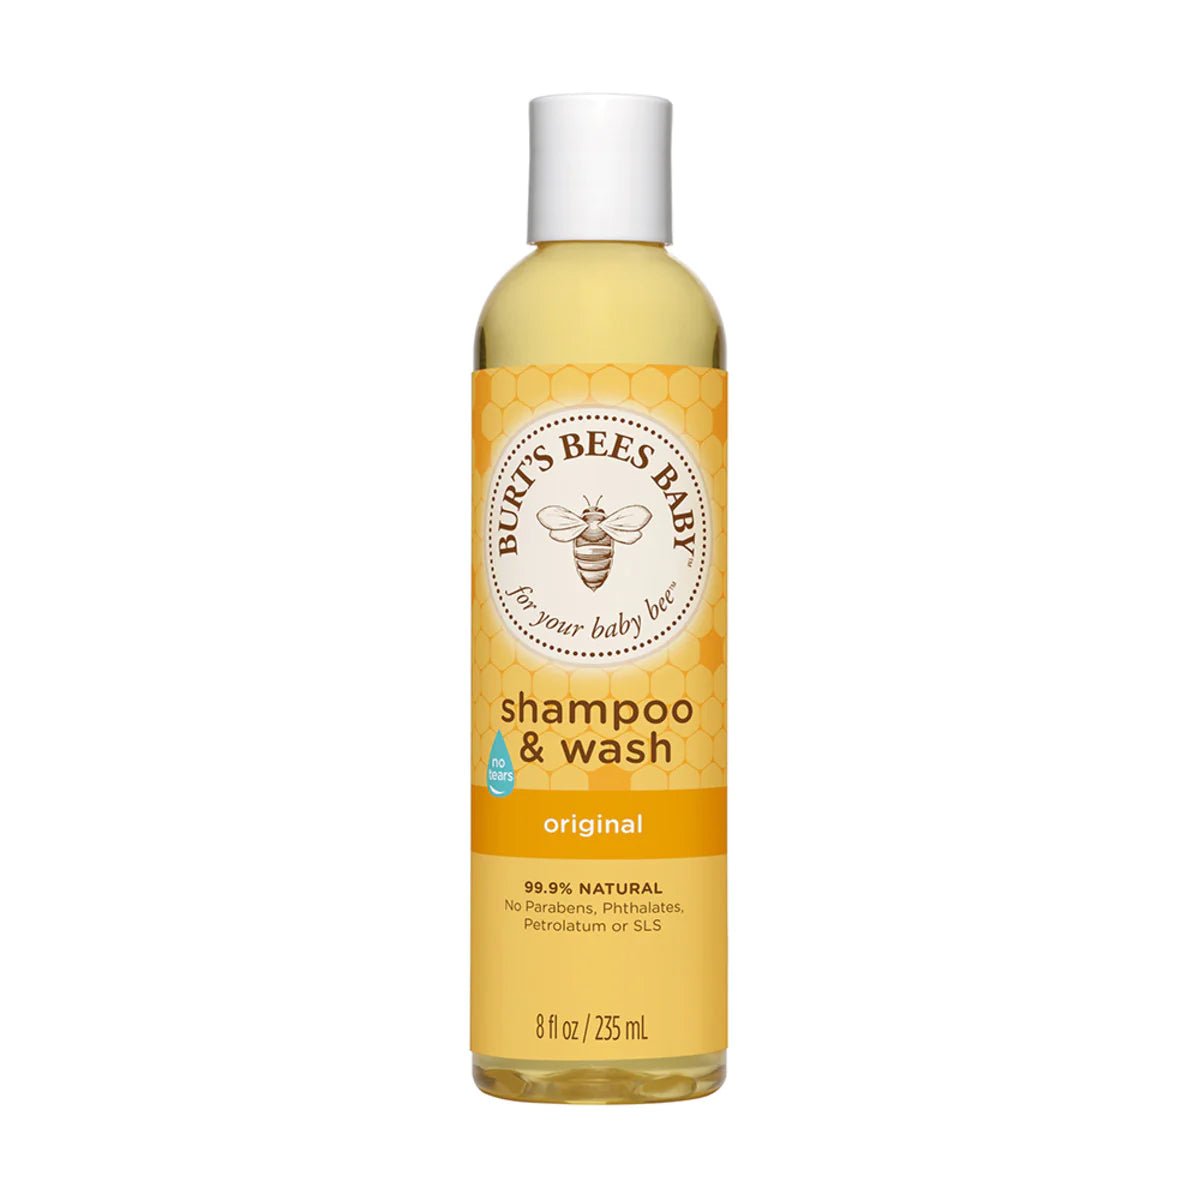 BURT’S BEES BABY Bee Shampoo & Wash Original 236ml - Preston Apothecary